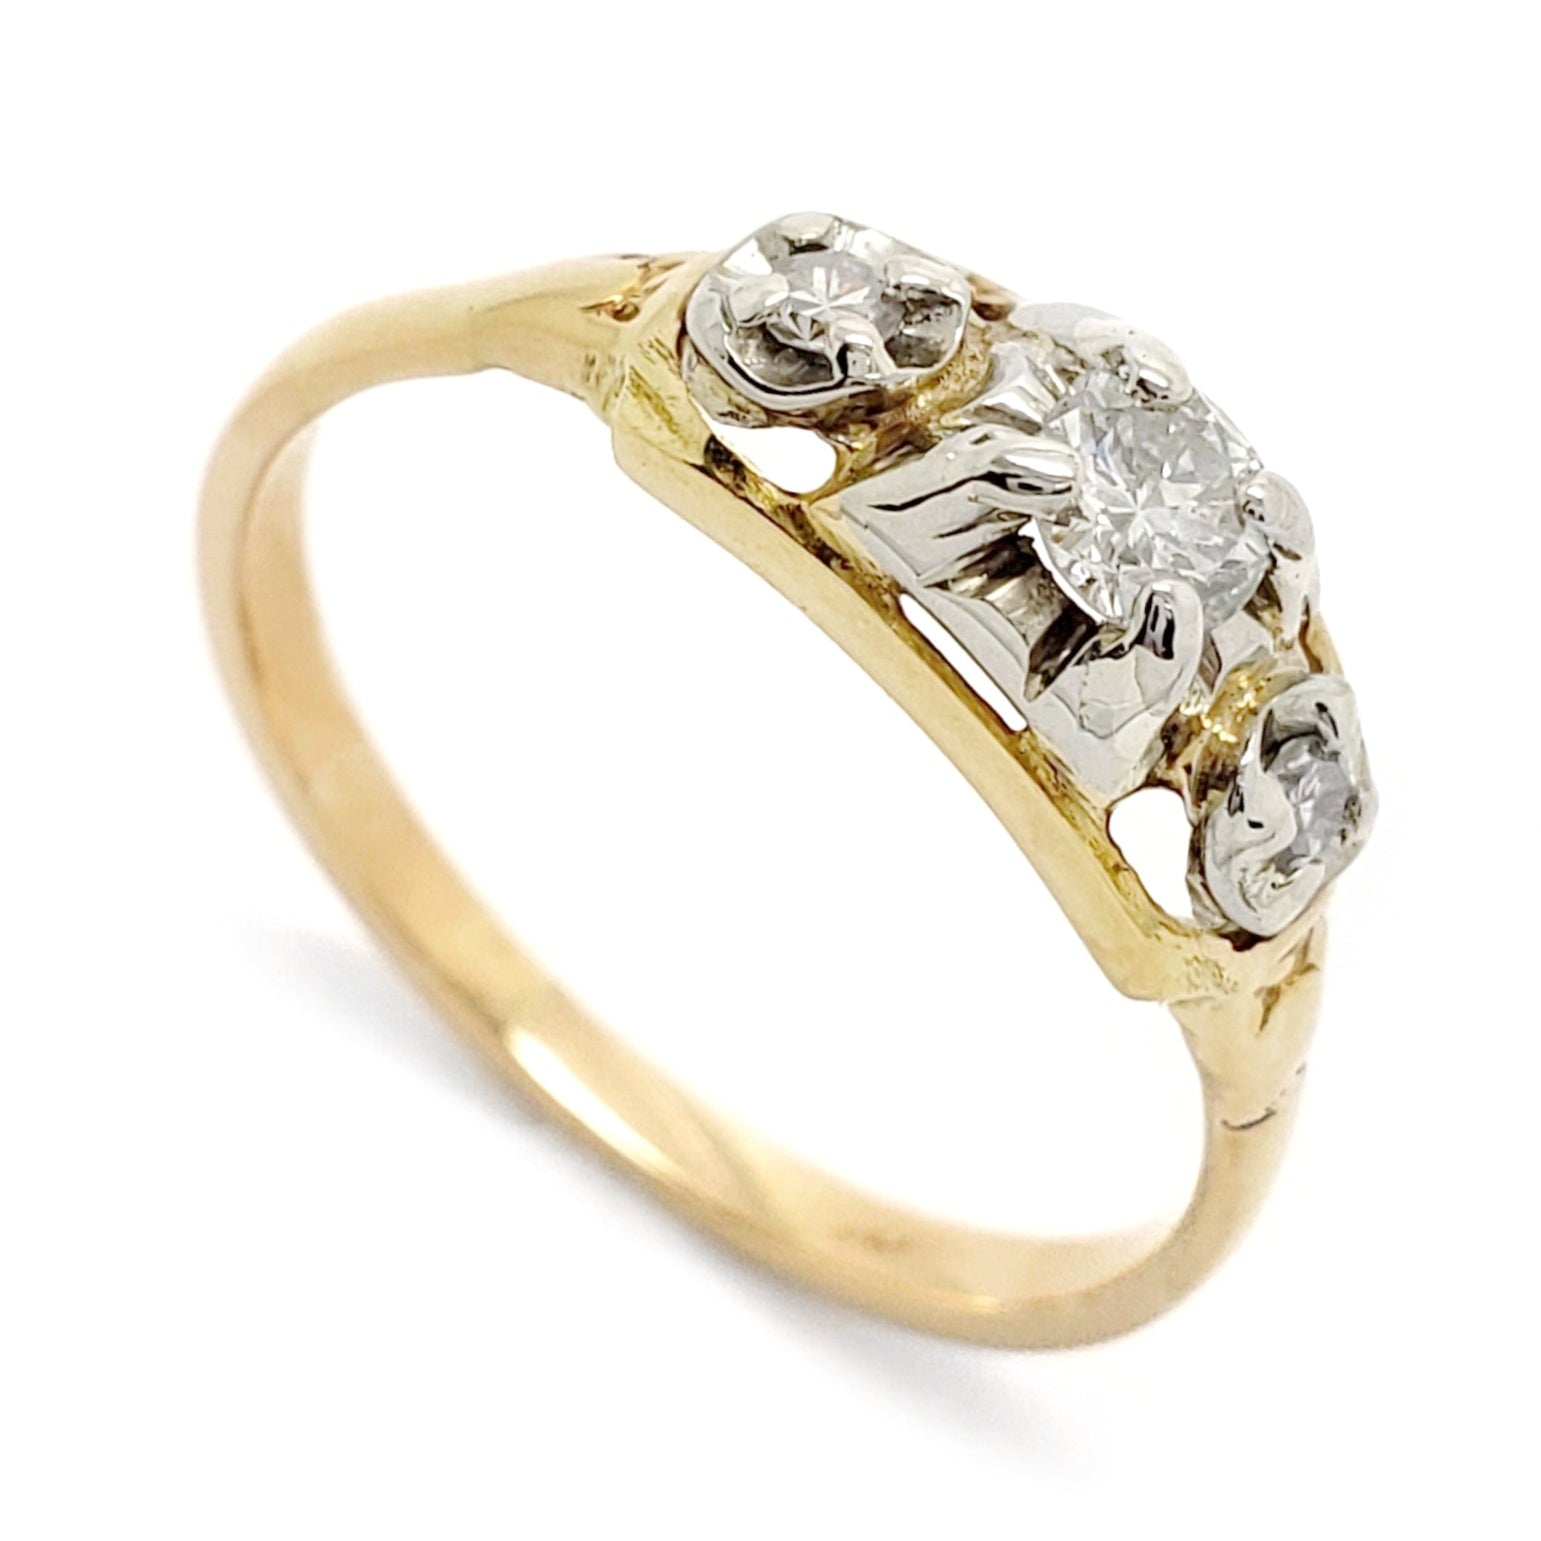 Antique Three Stone Diamond Ring | Petite